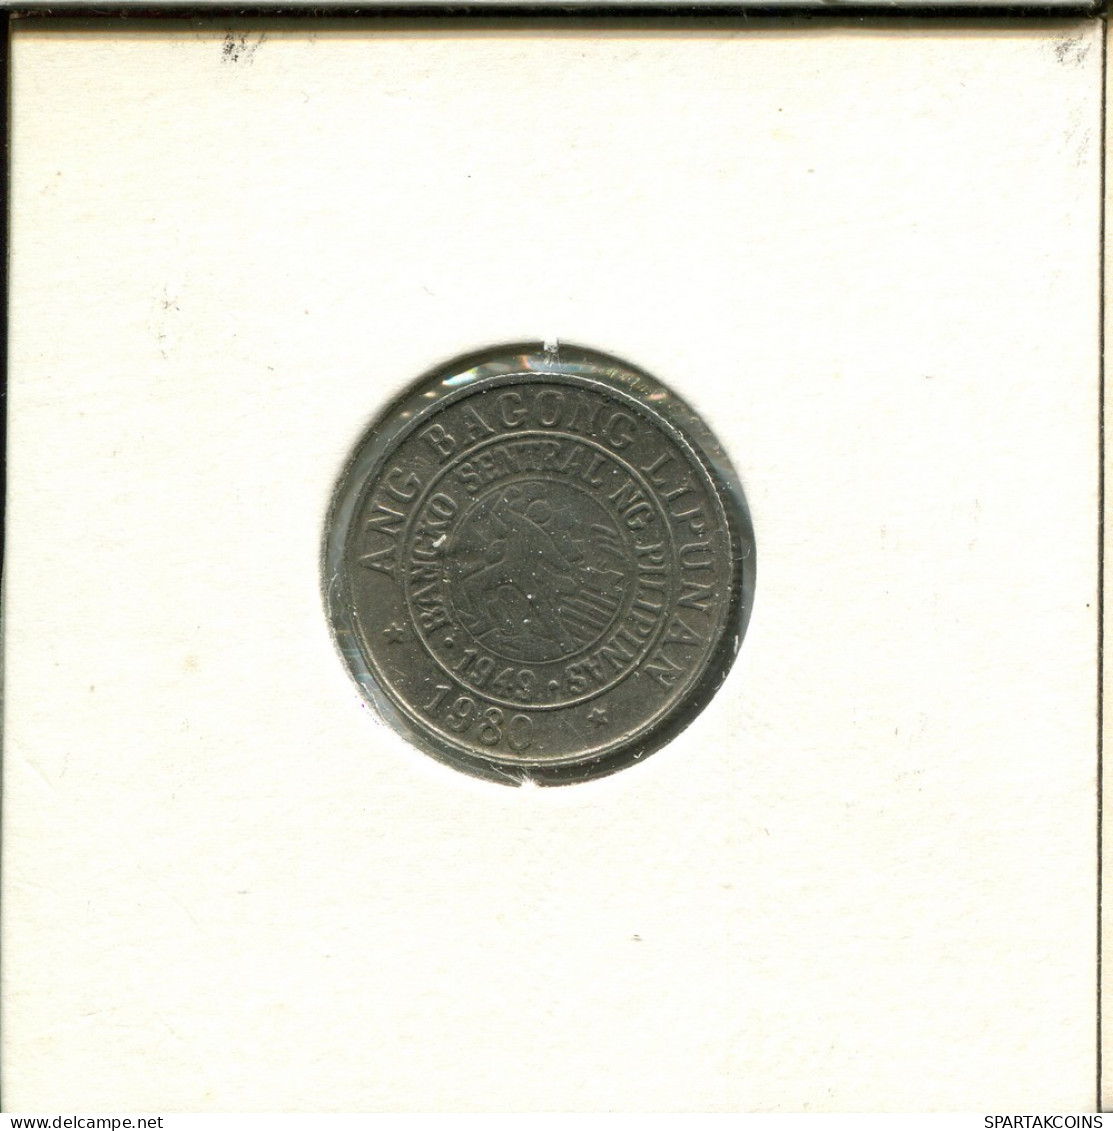 10 SENTIMOS 1980 PHILIPPINES Coin #AS712.U.A - Filipinas